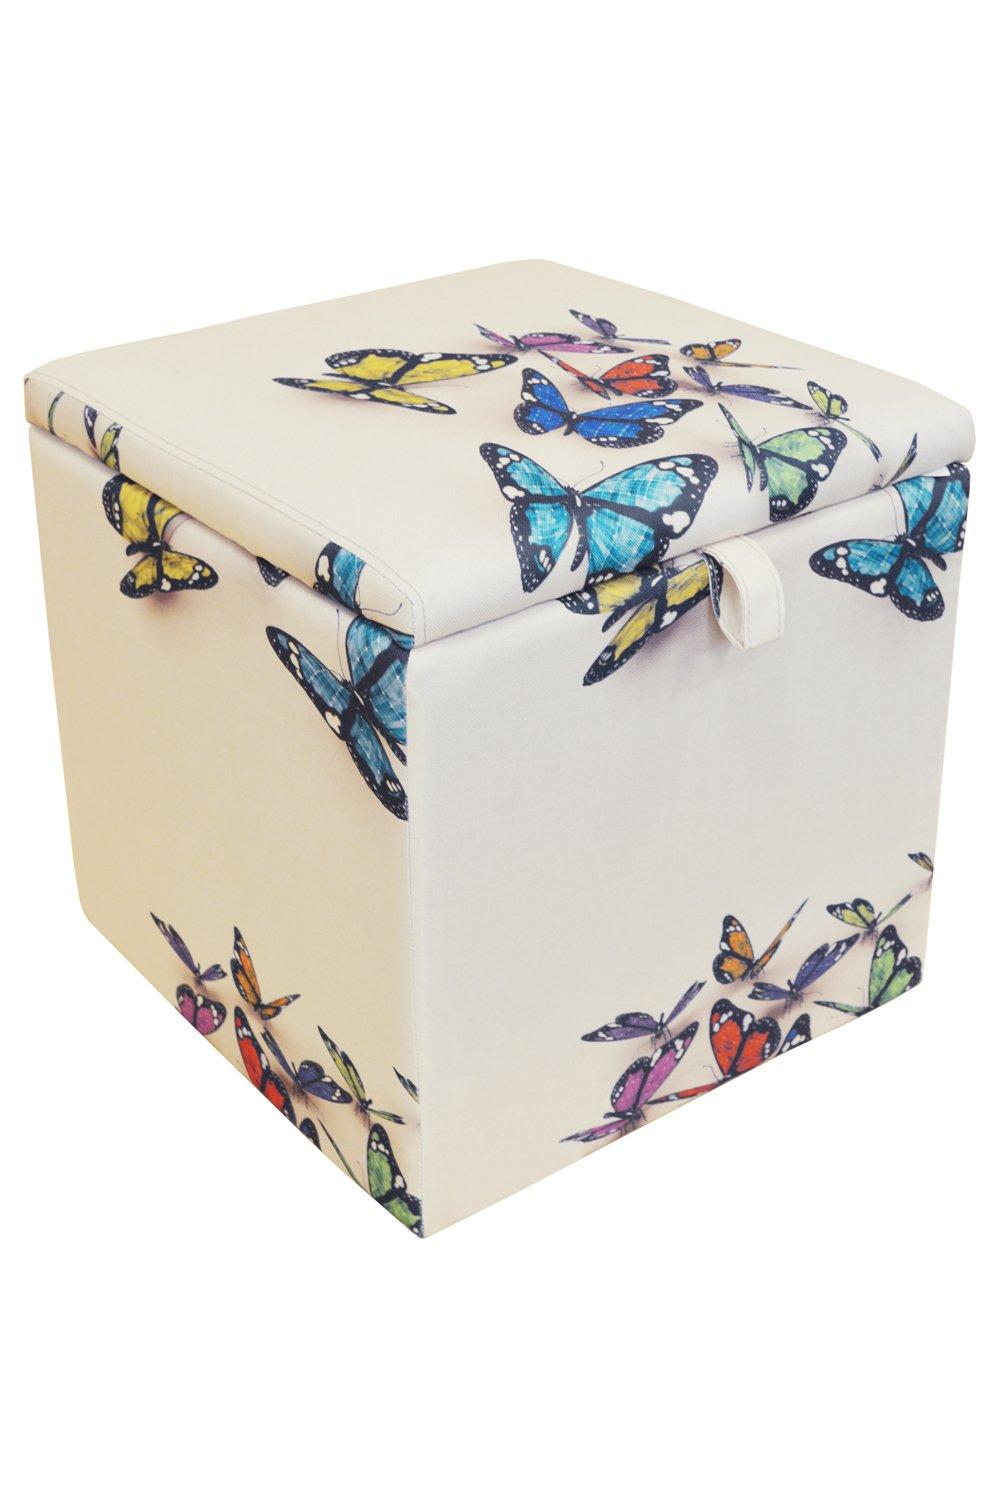 'Butterfly' - Square Storage Ottoman Stool  Blanket Box Cube - Cream  Multi